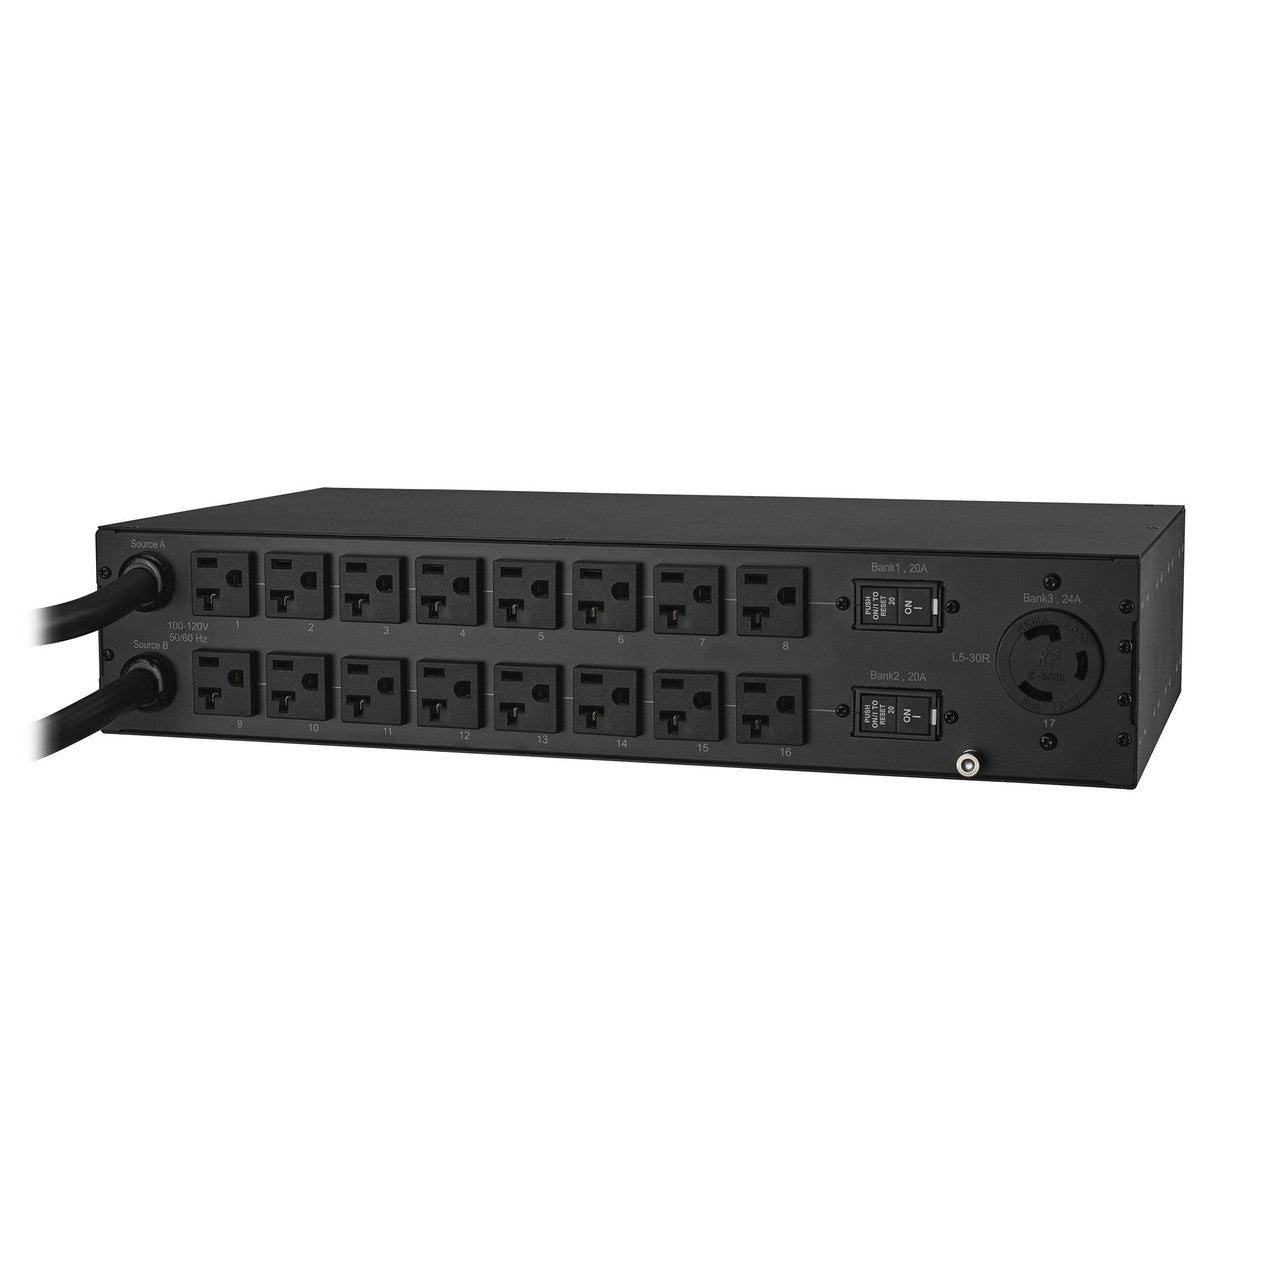 CyberPower PDU30MT17AT 30A (Derated to 24A), 100 - 120 V, 2 x NEMA L5-30P plug, 17 rear